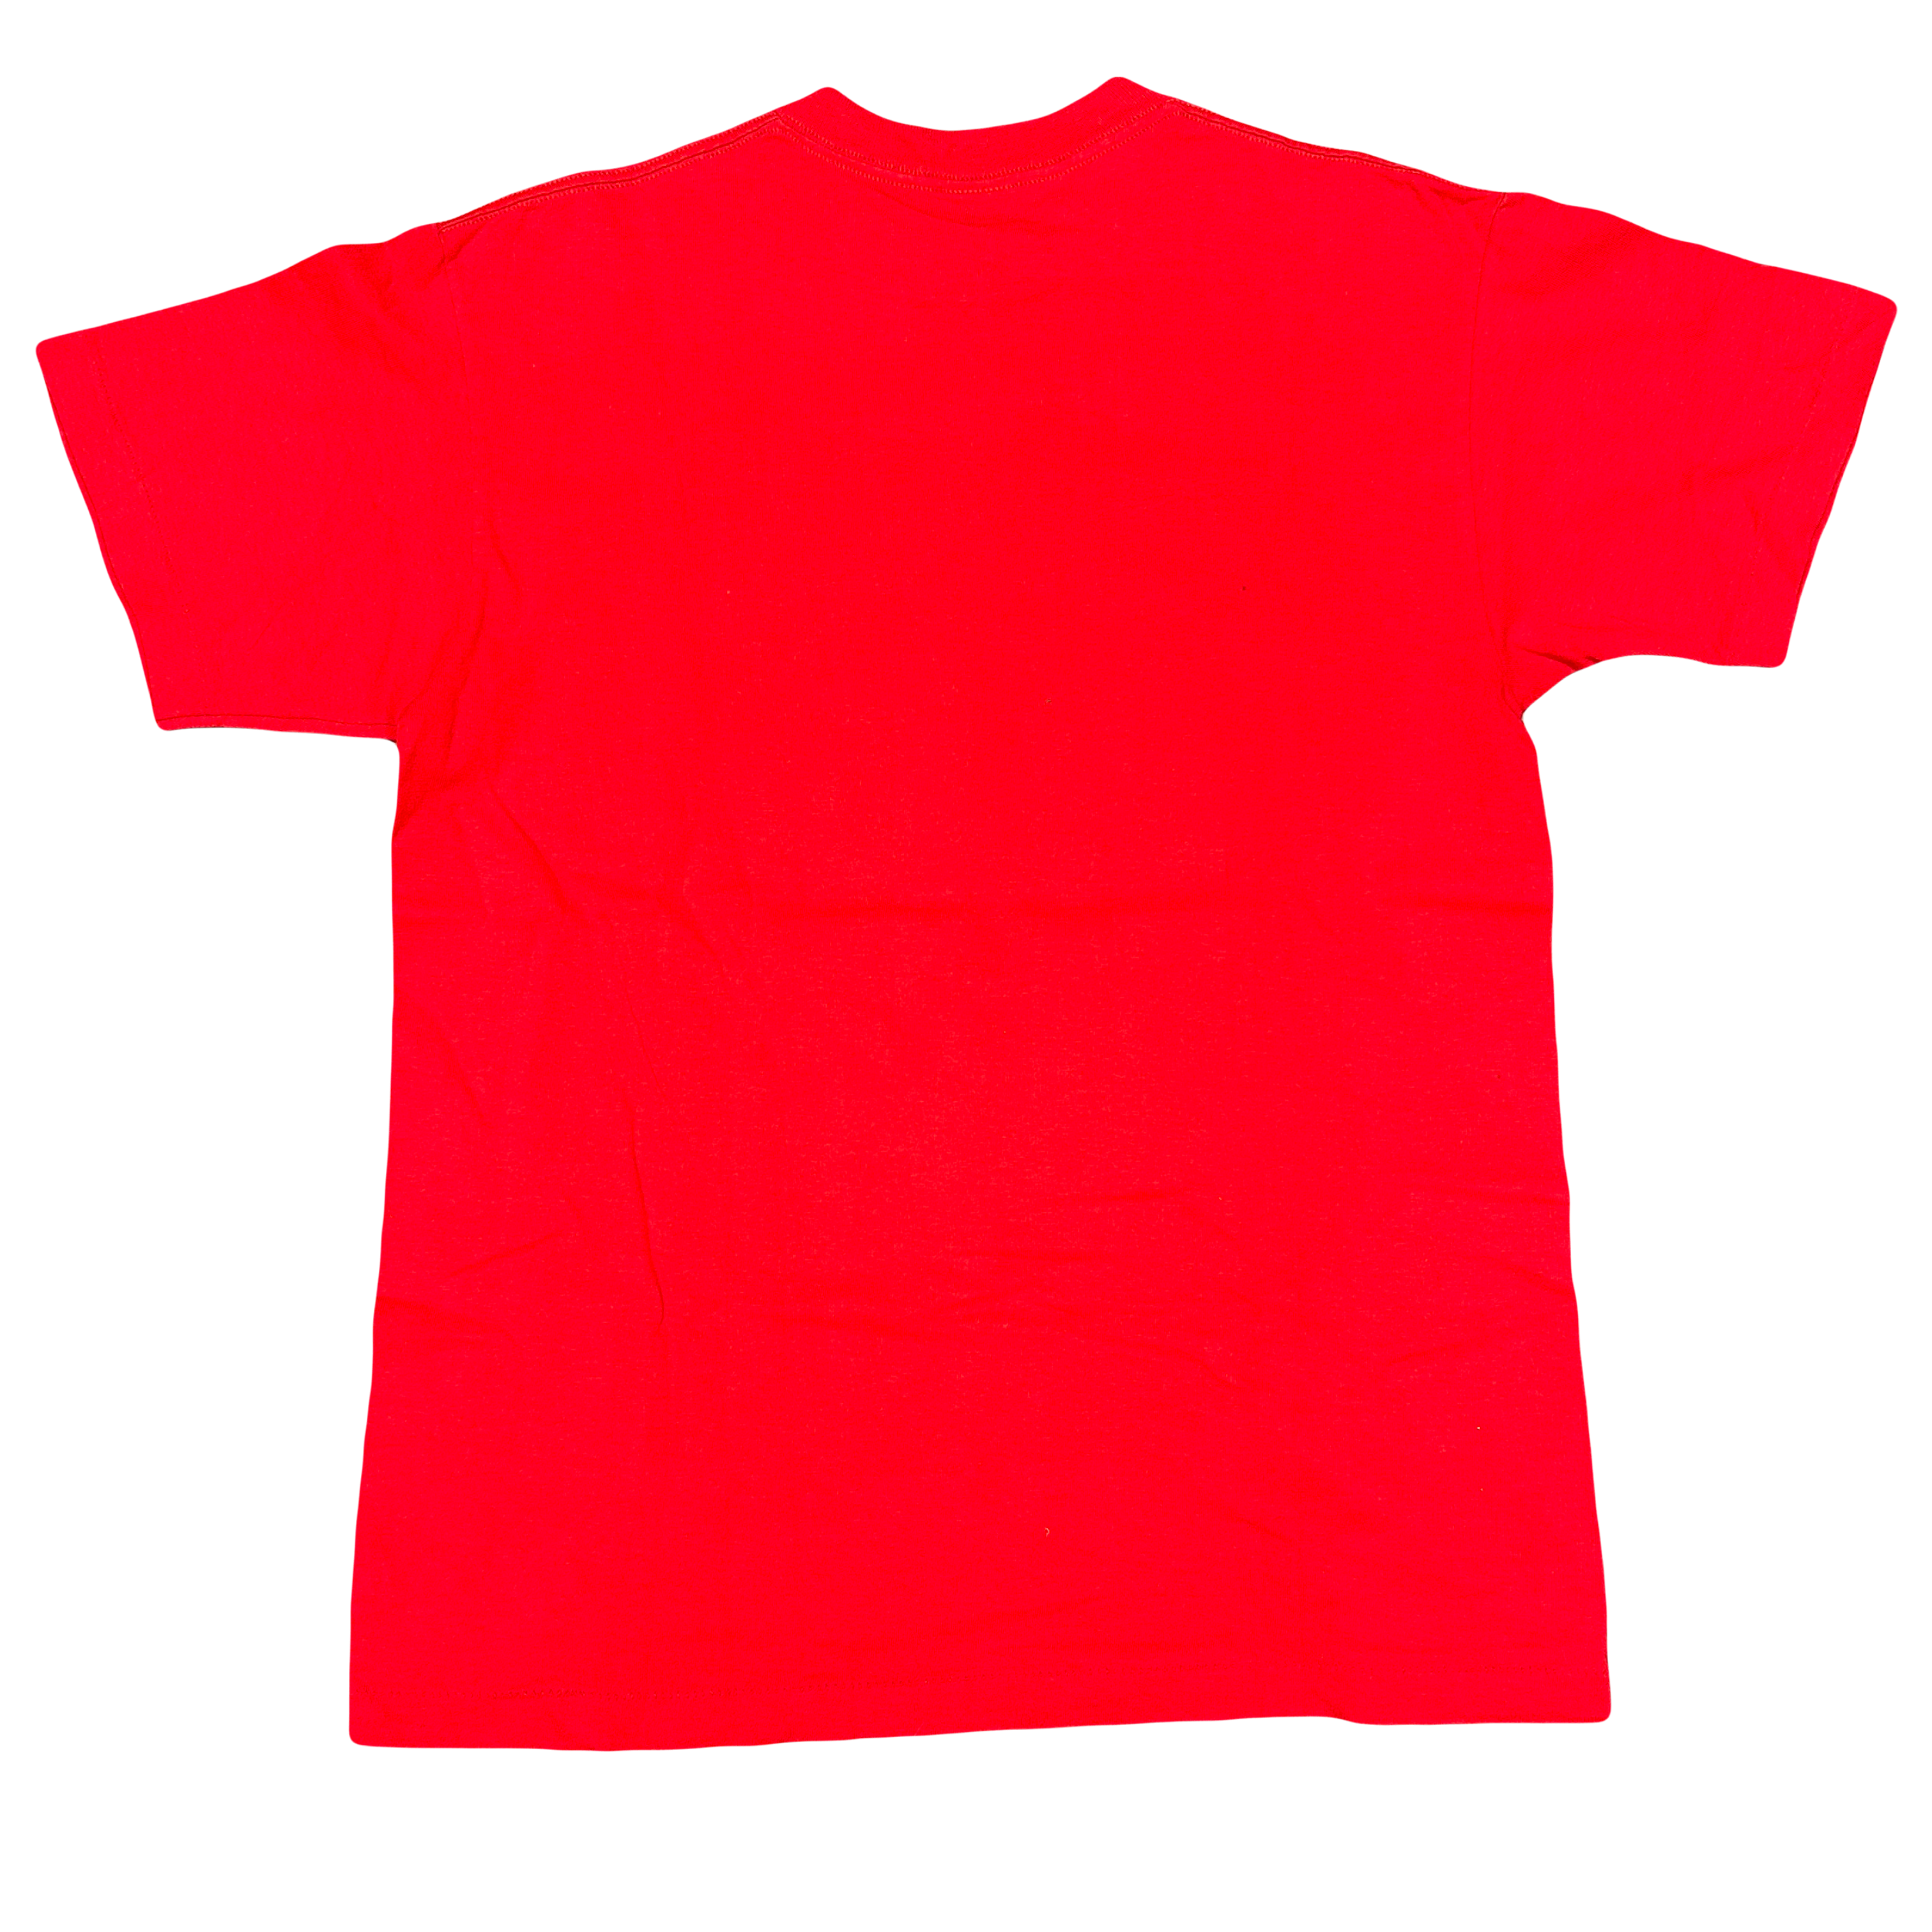 Louis Vuitton Monogram T-shirt – Modalite Prive